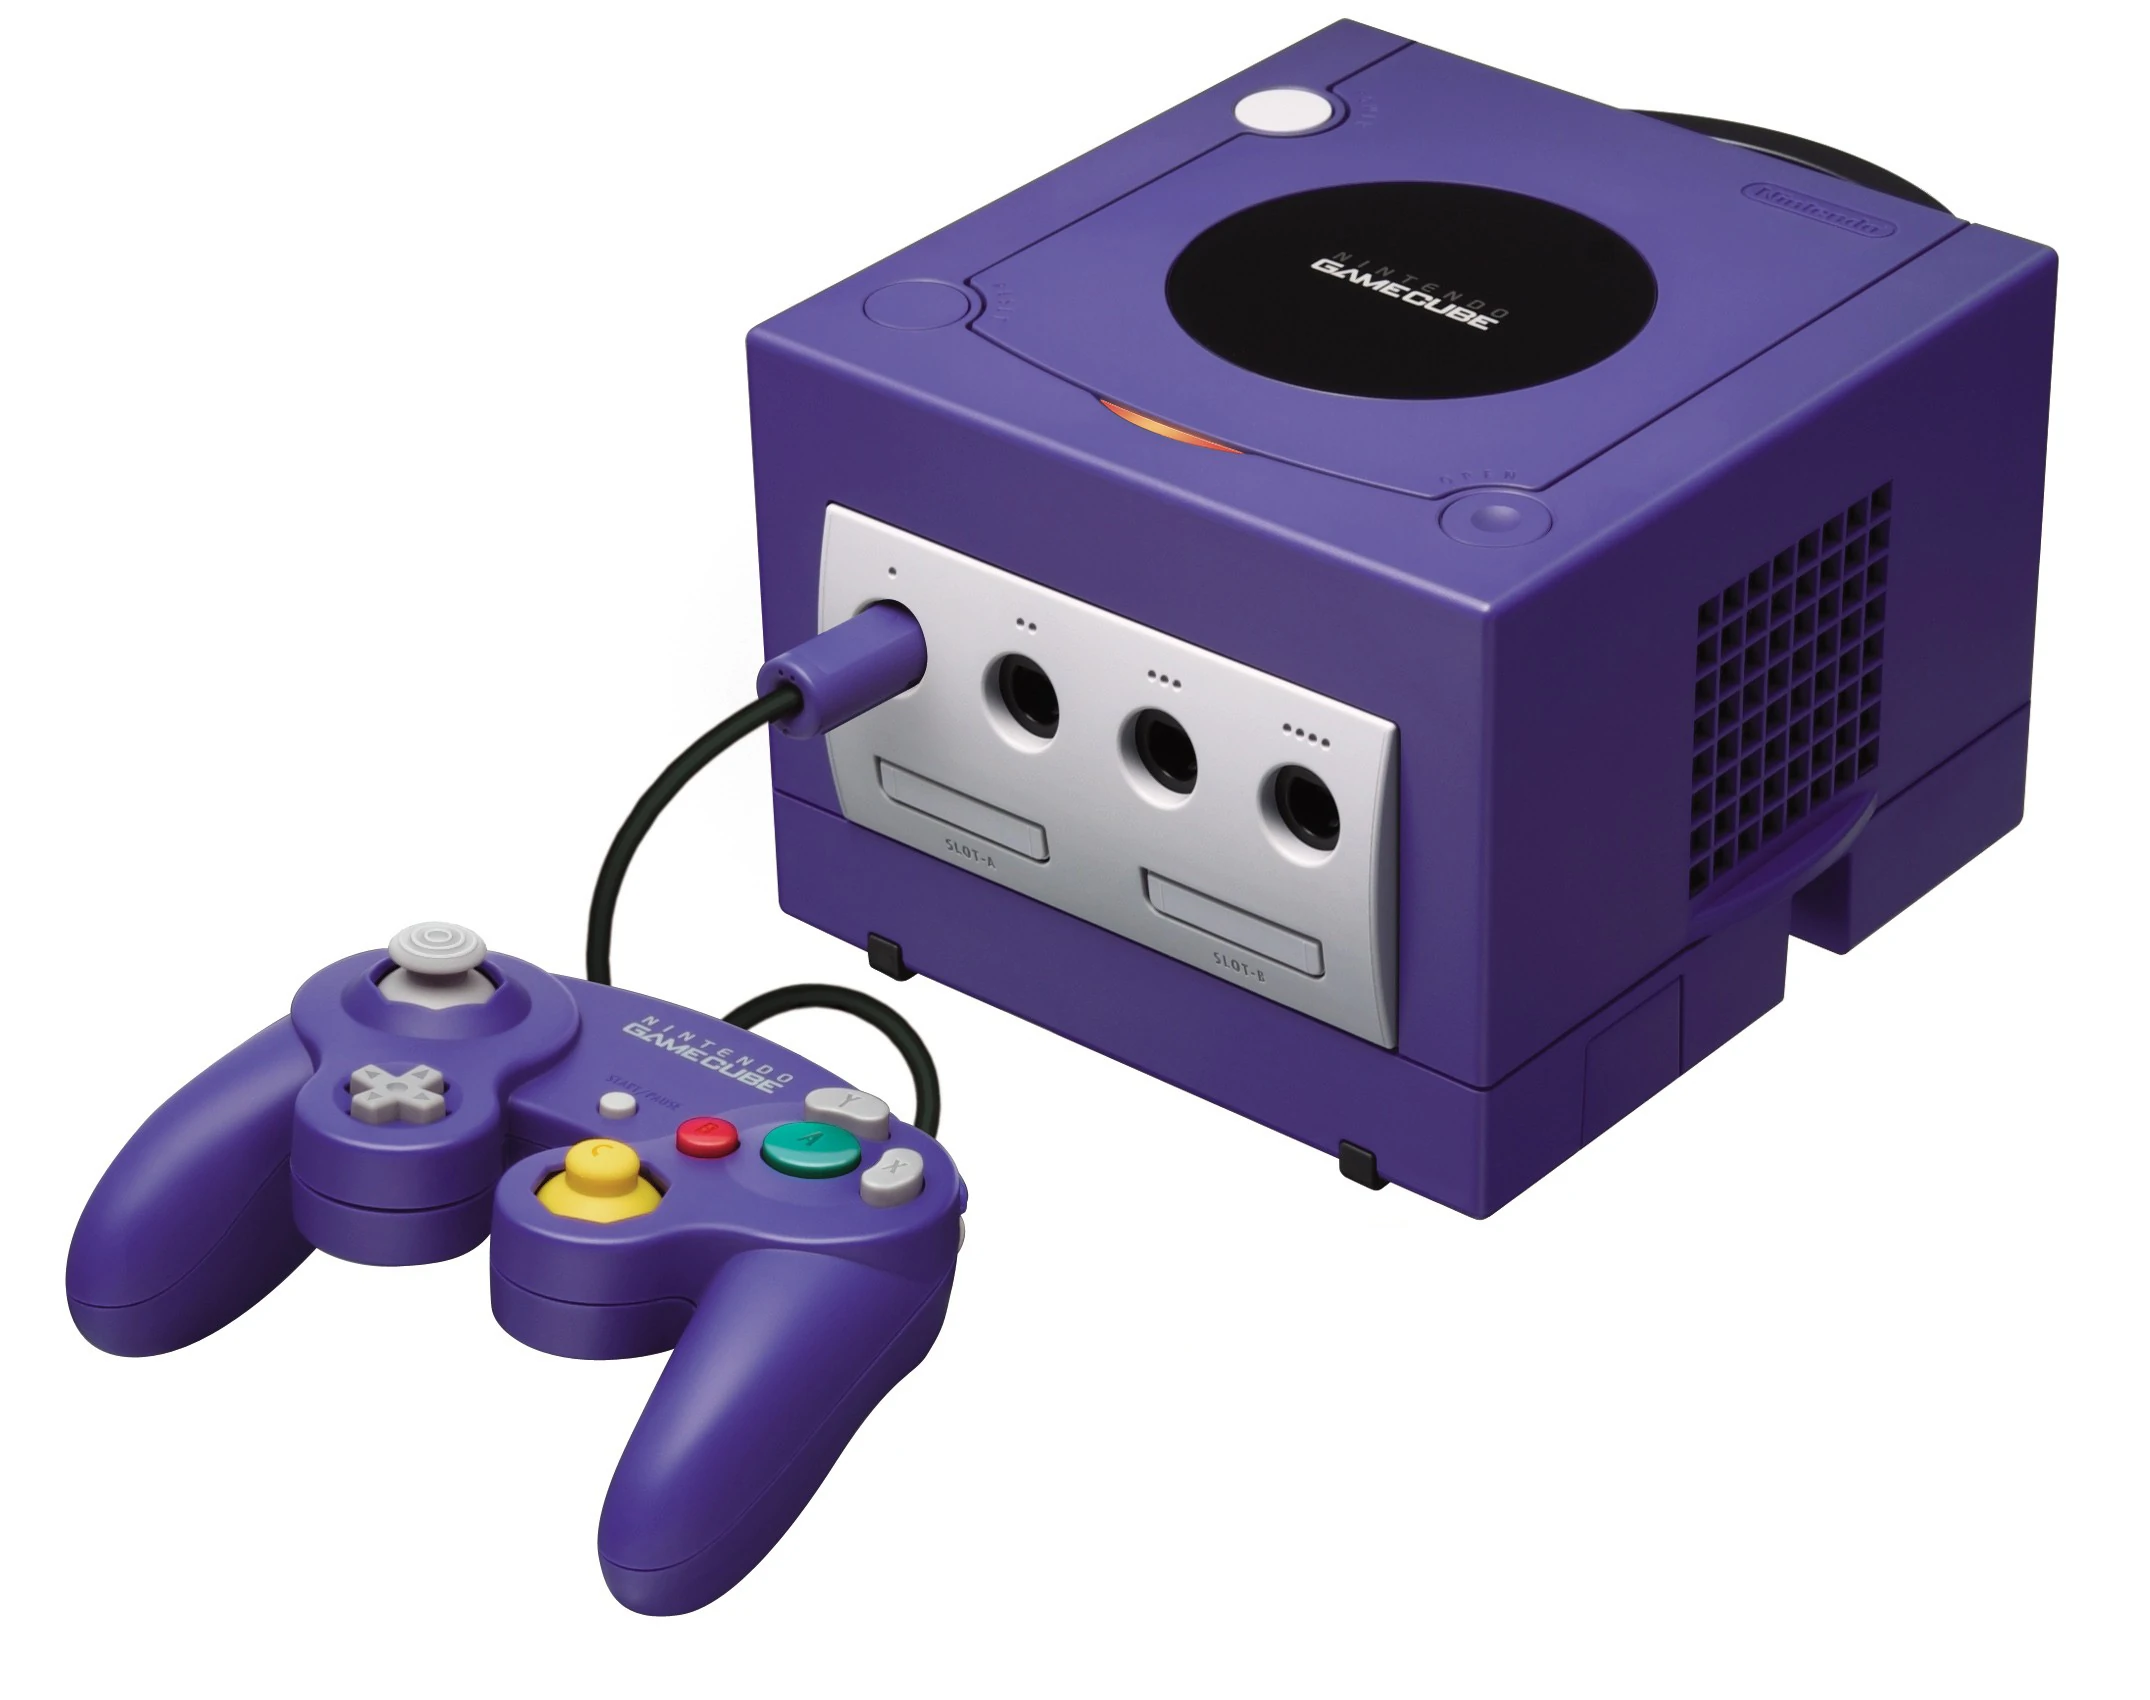 Nintendo GameCube Console - Indigo